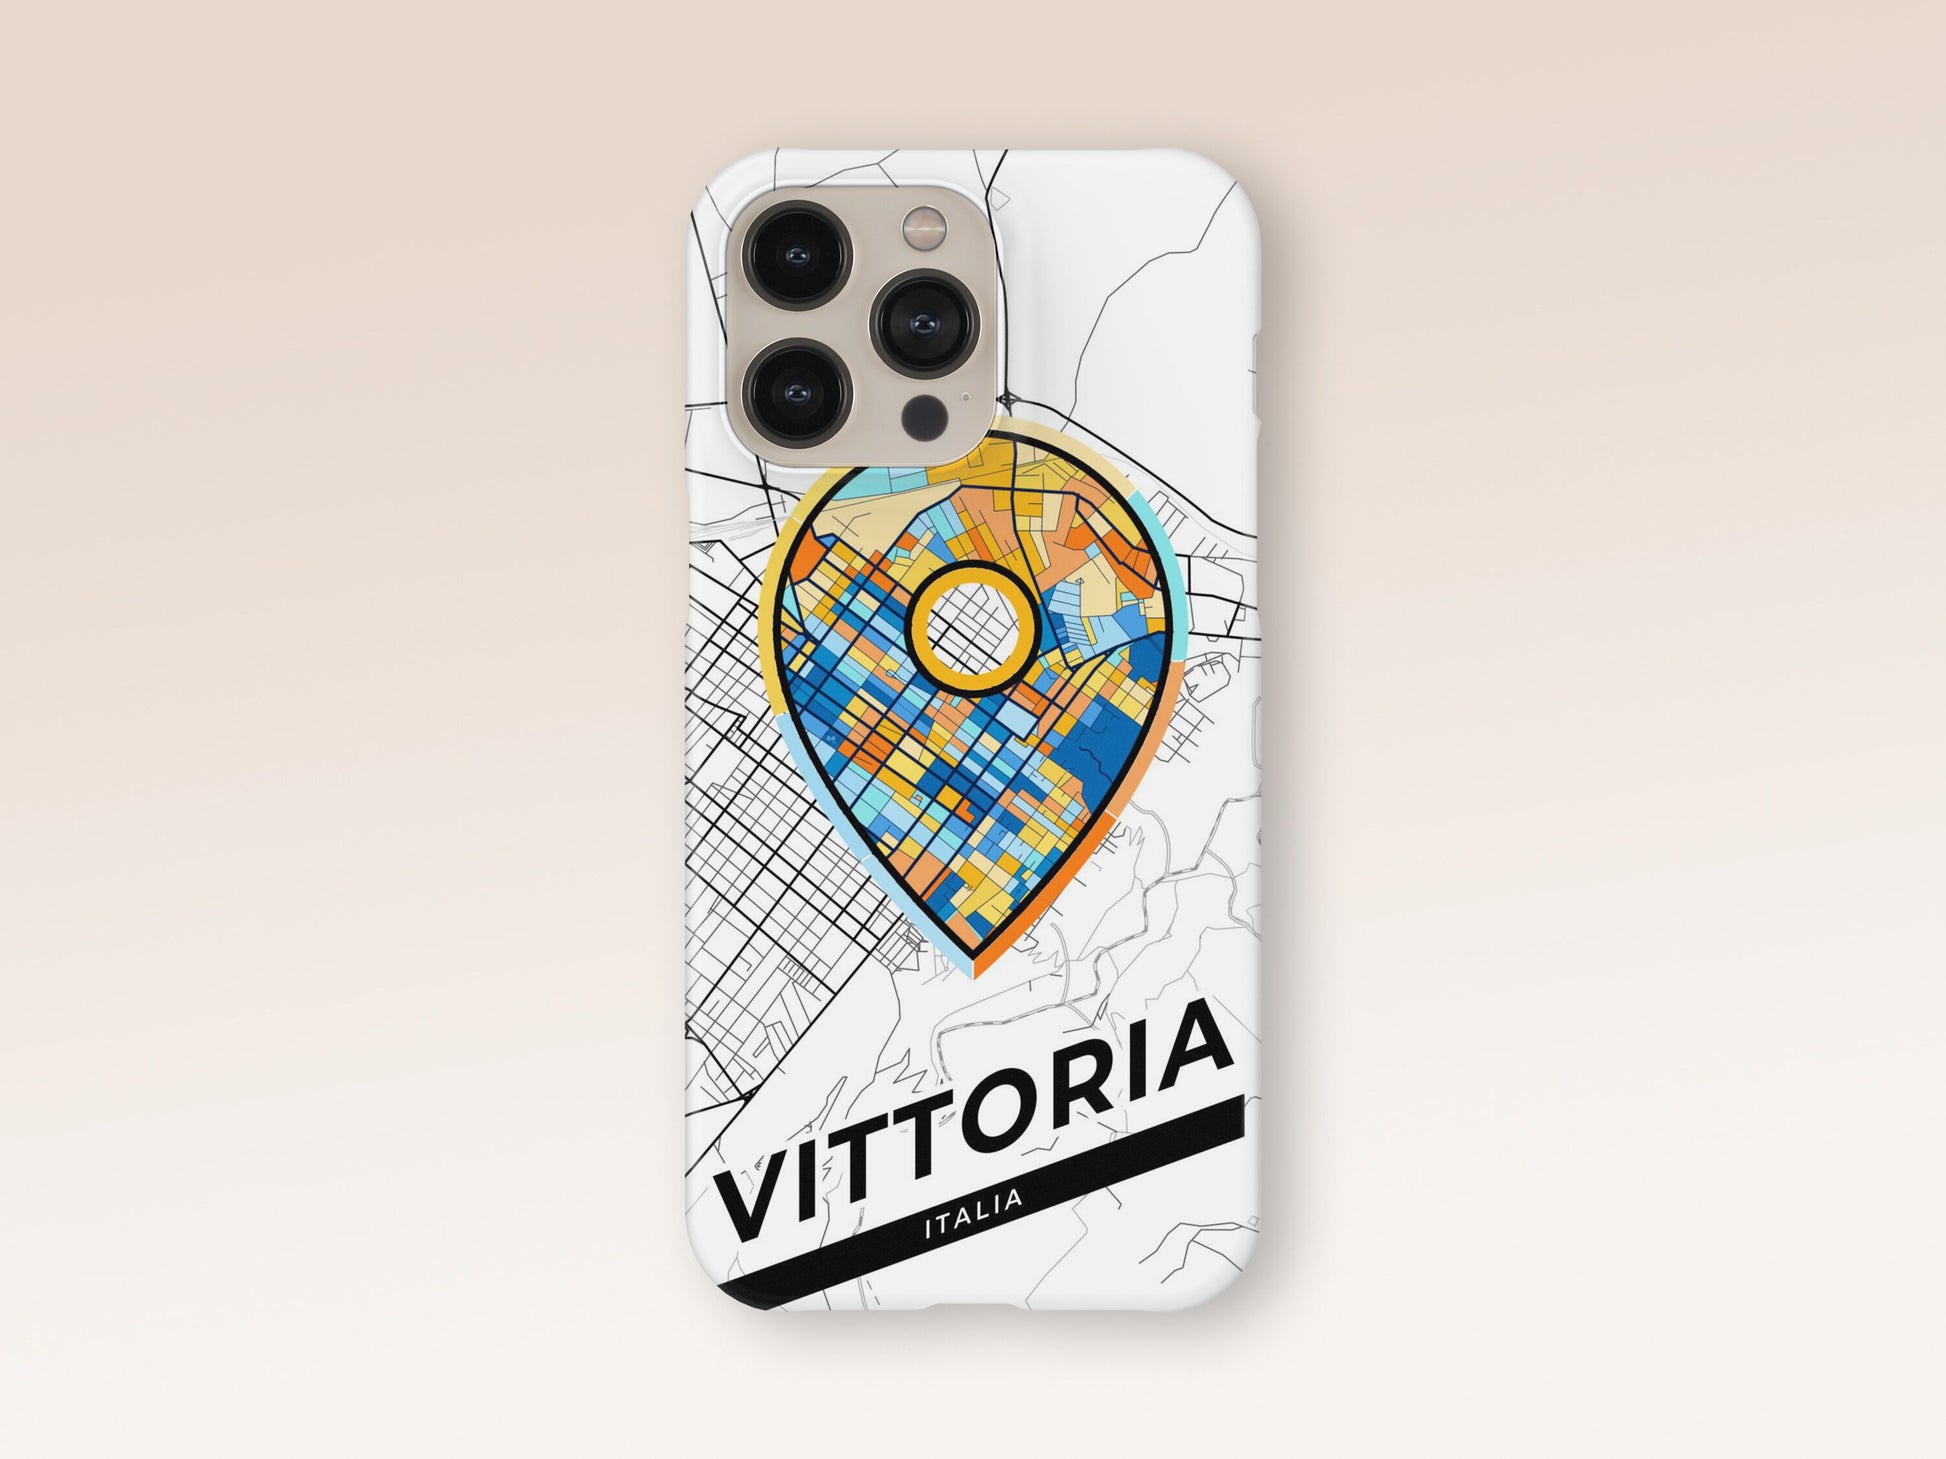 Vittoria Italy slim phone case with colorful icon 1